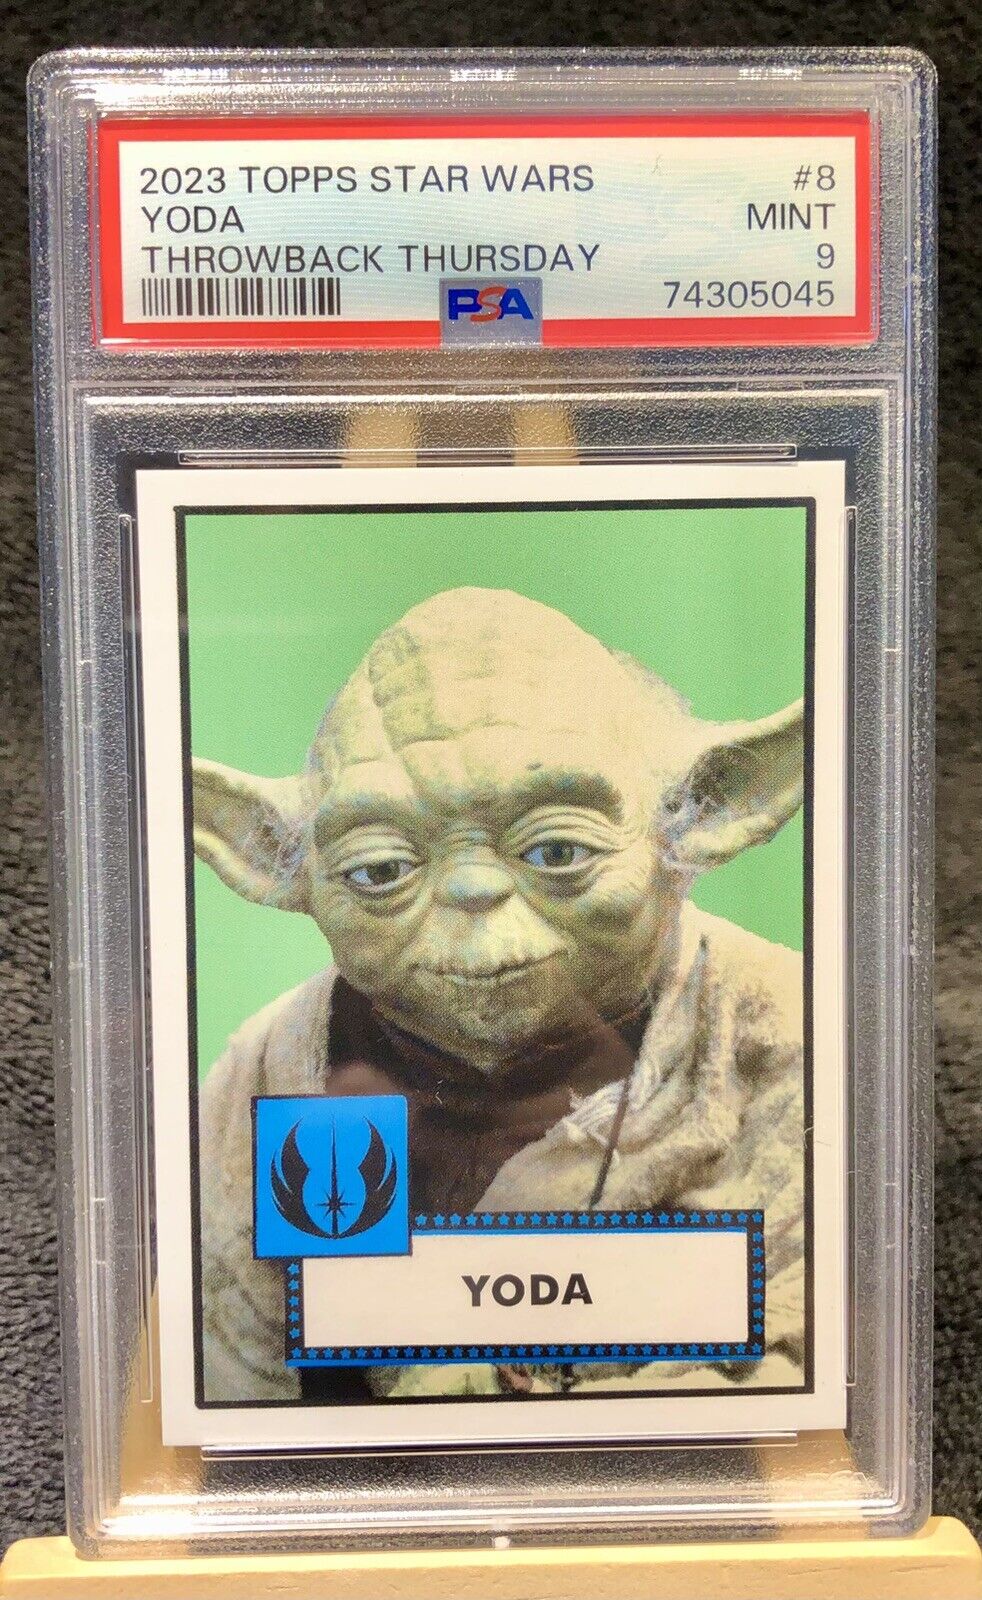 2023 Topps Star Wars Throwback Thursday TBT - PSA Mint 9 - #8 - Yoda